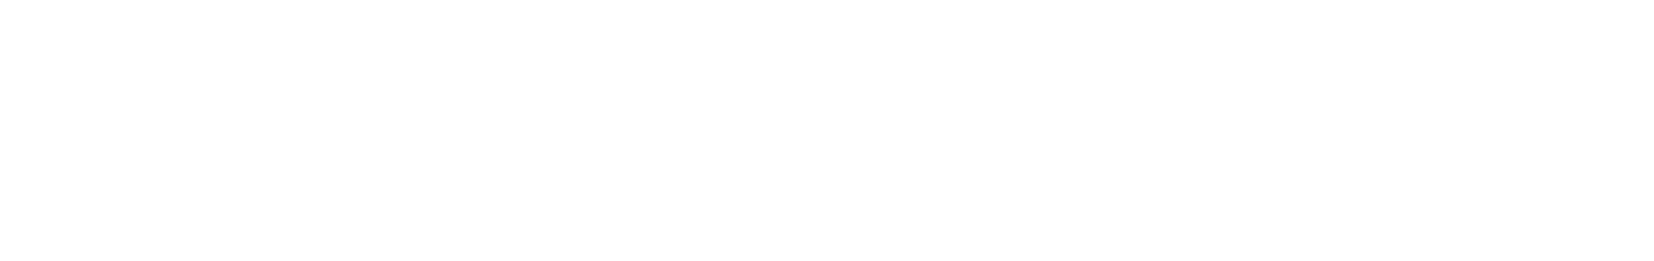 EUROJUSRI INTERNATIONNAL